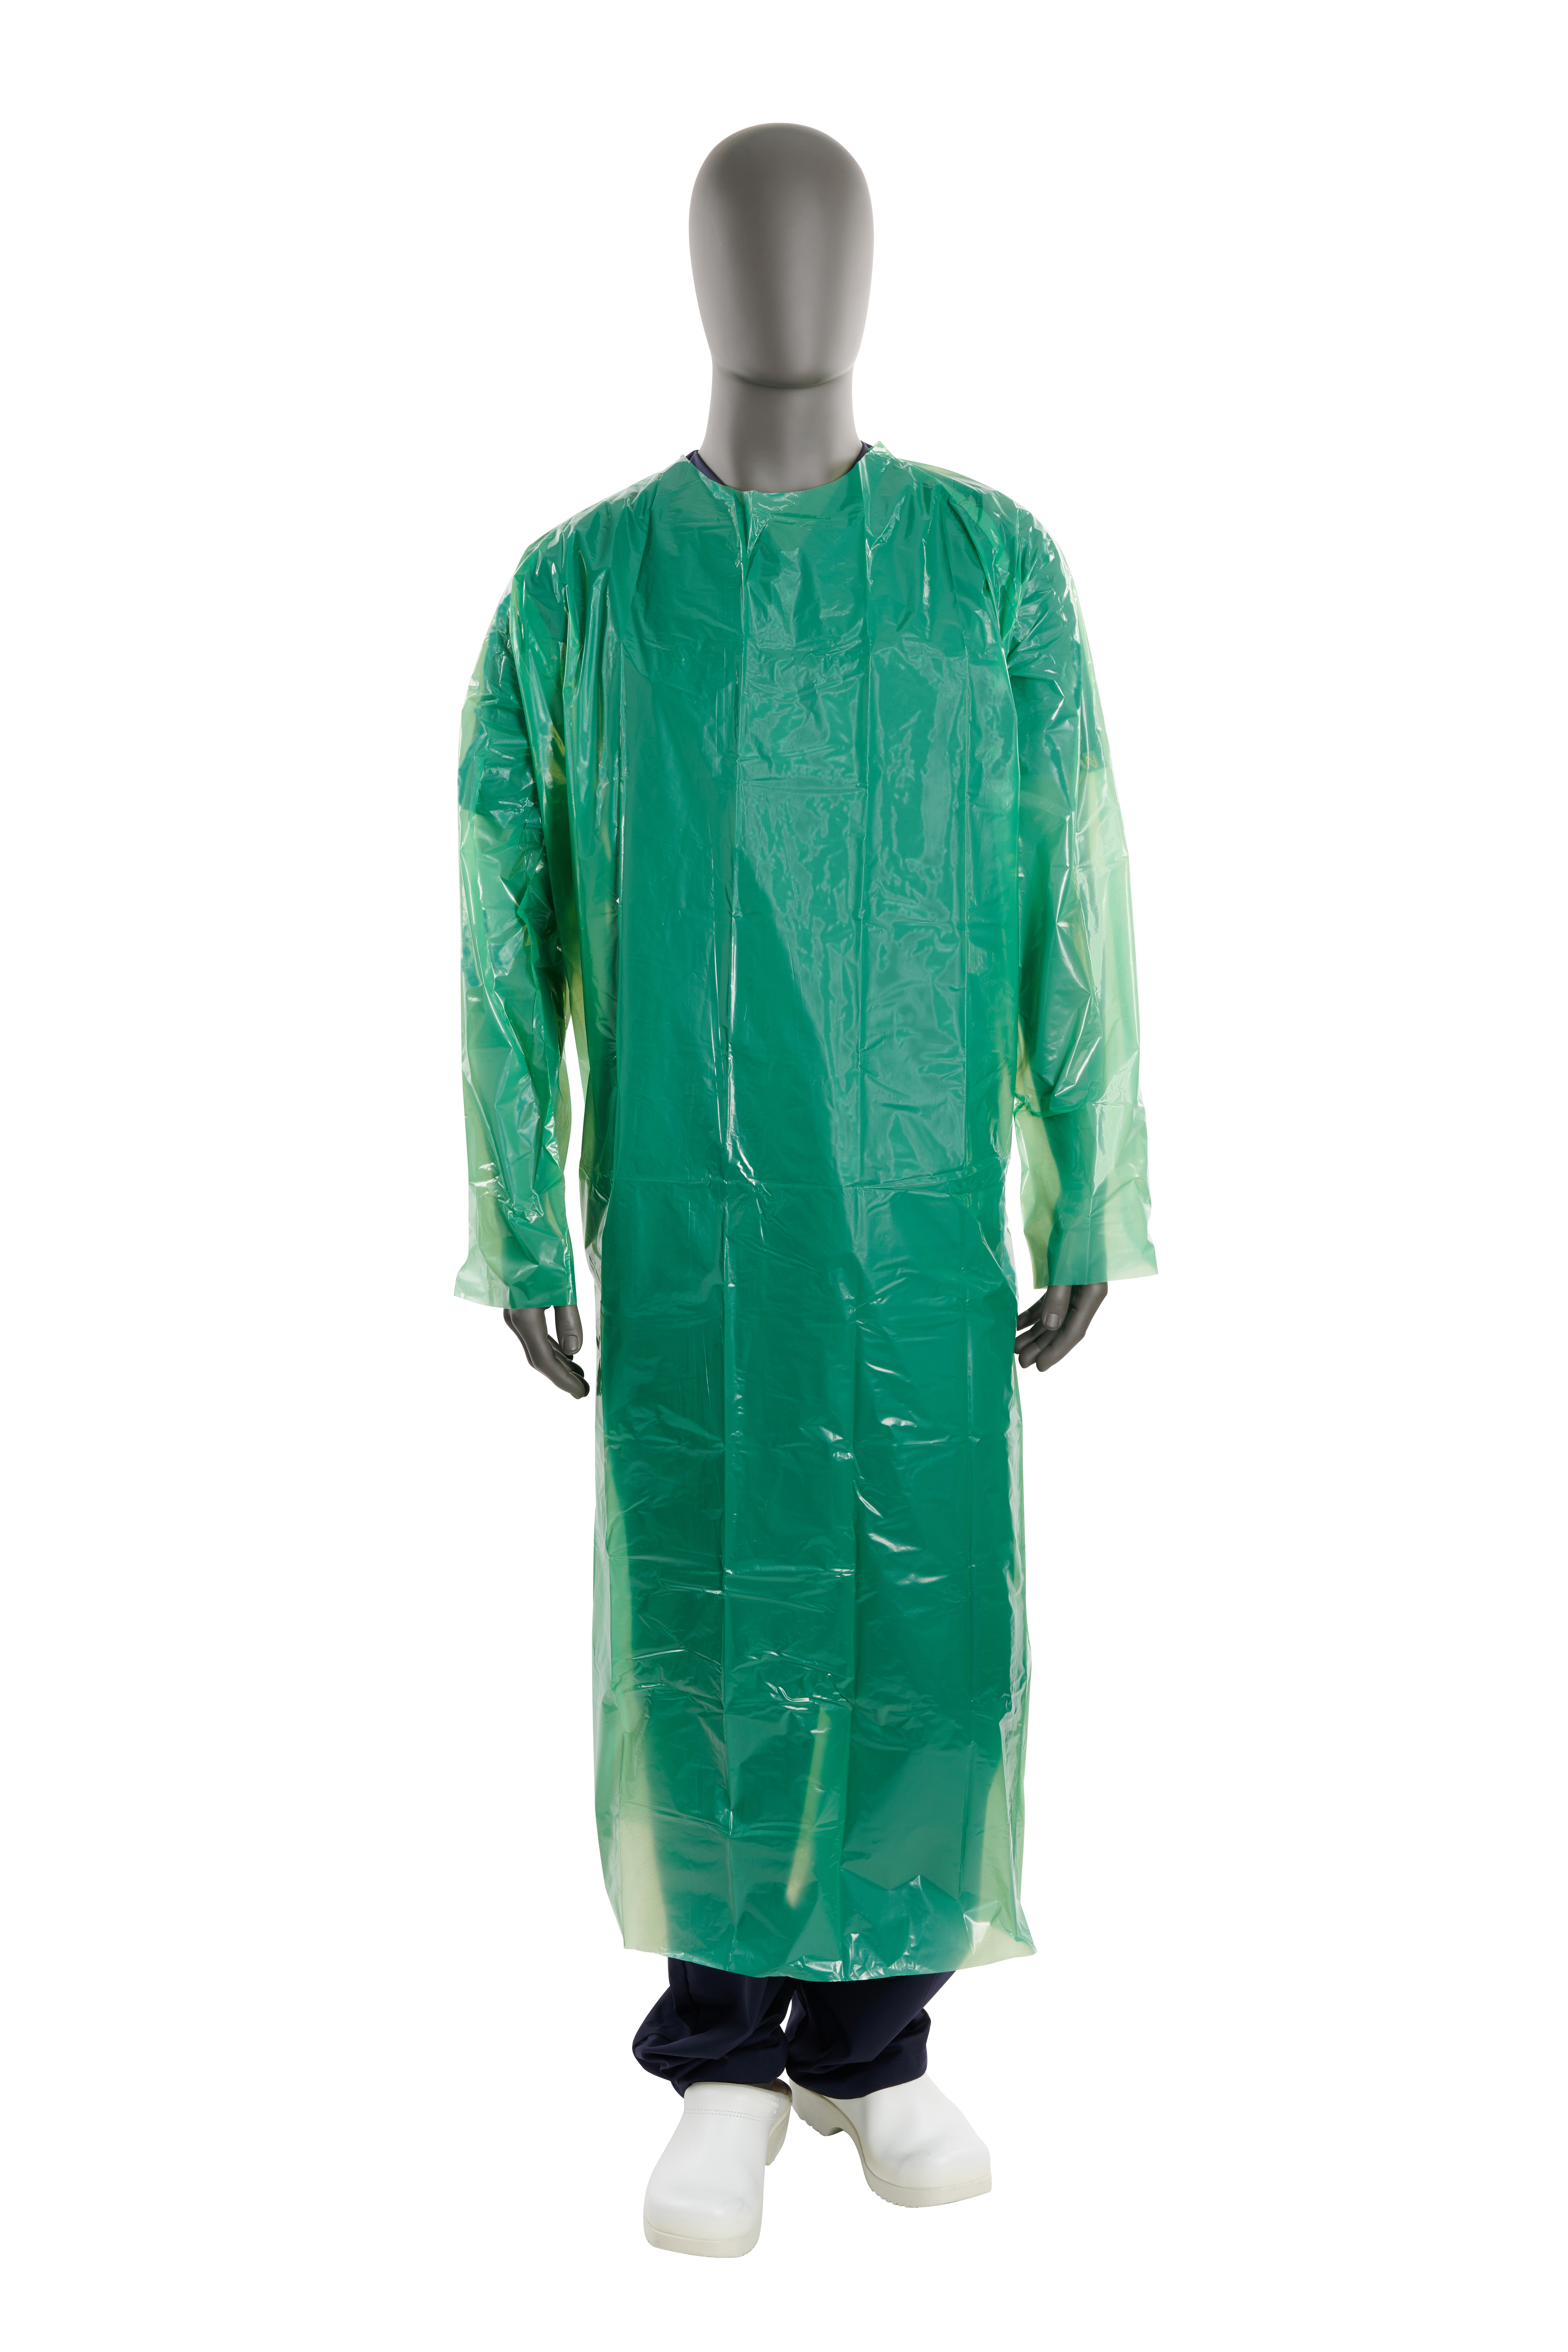 KRUTEX disposable non-sterile gown, green, 25/pk